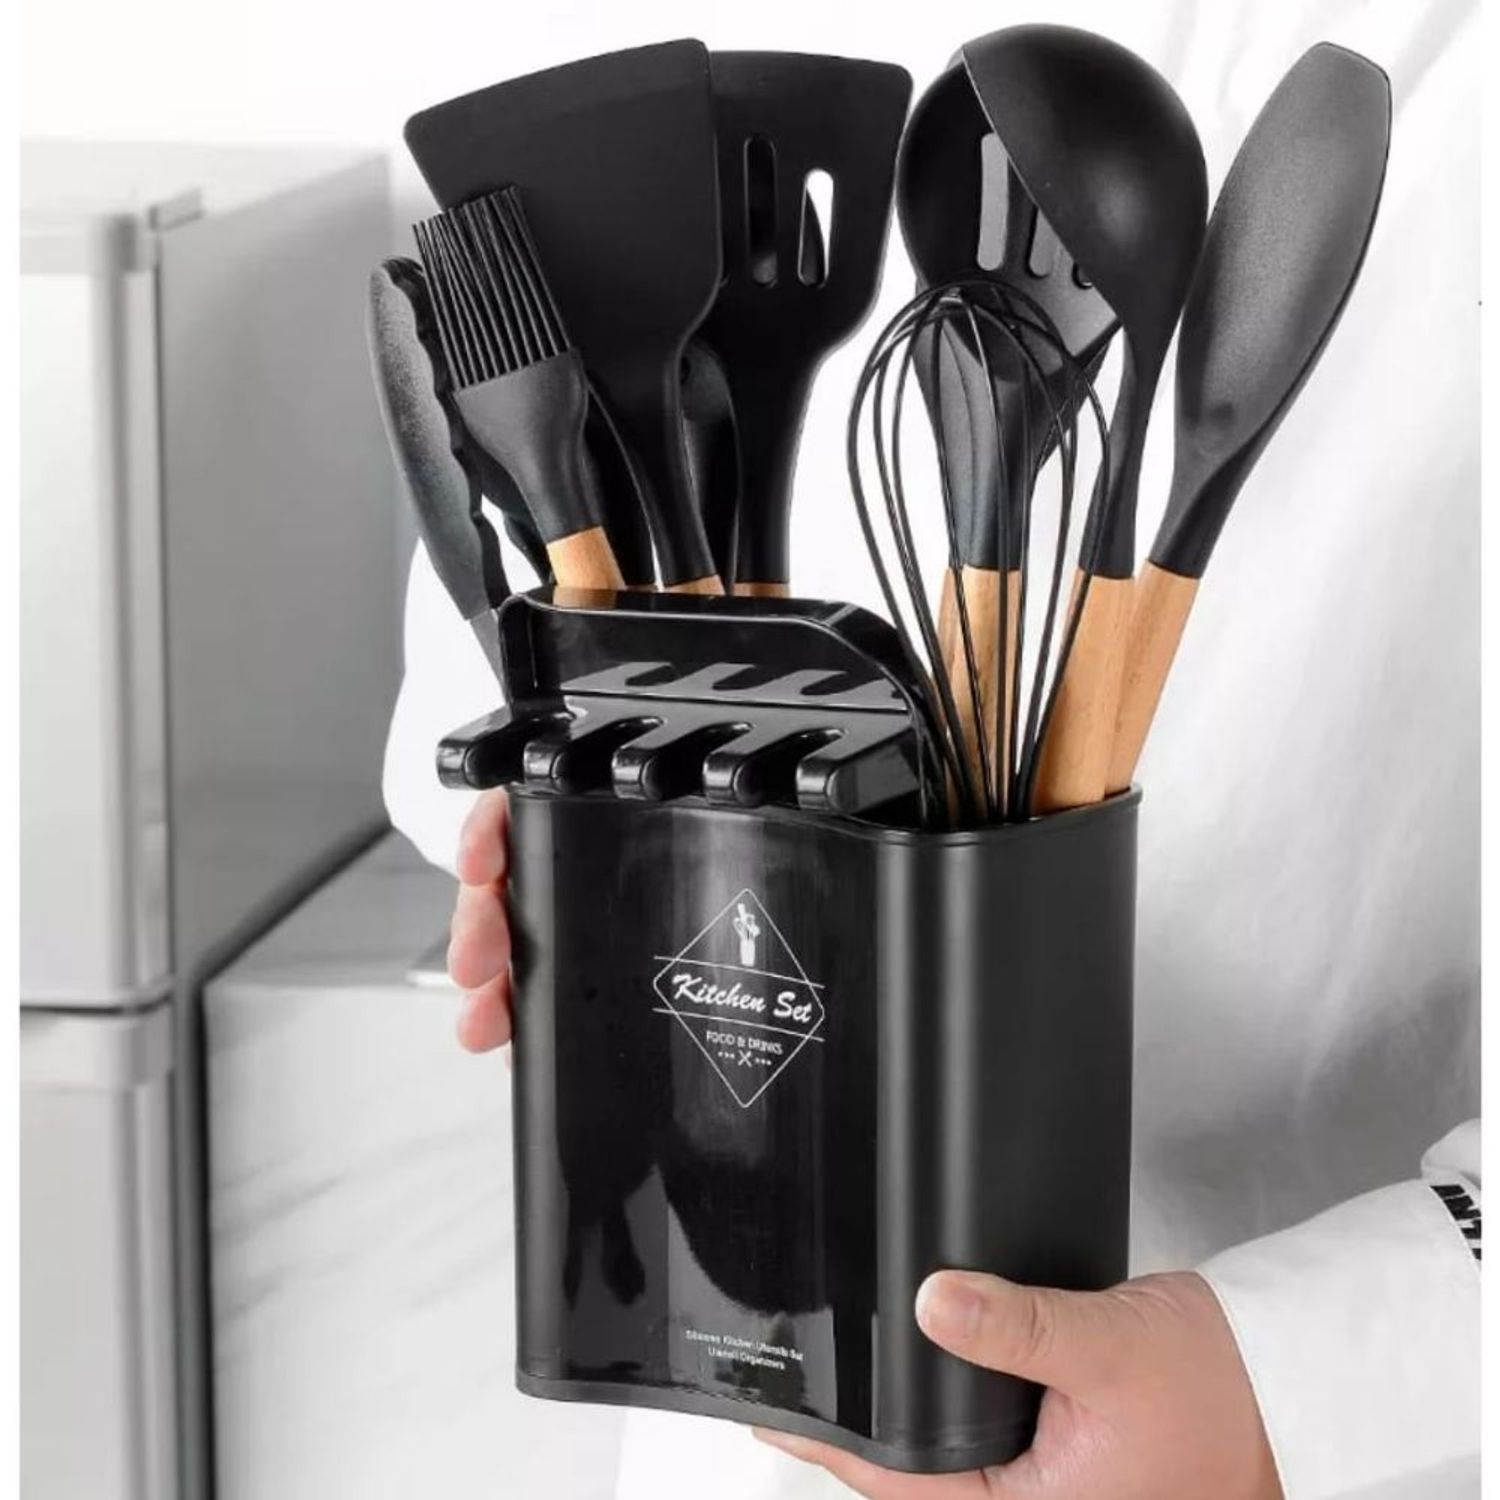 Juego de utensilios de cocina antiadherentes de silicona con soporte,  utensilios de cocina para tu hermosa cocina (gris)